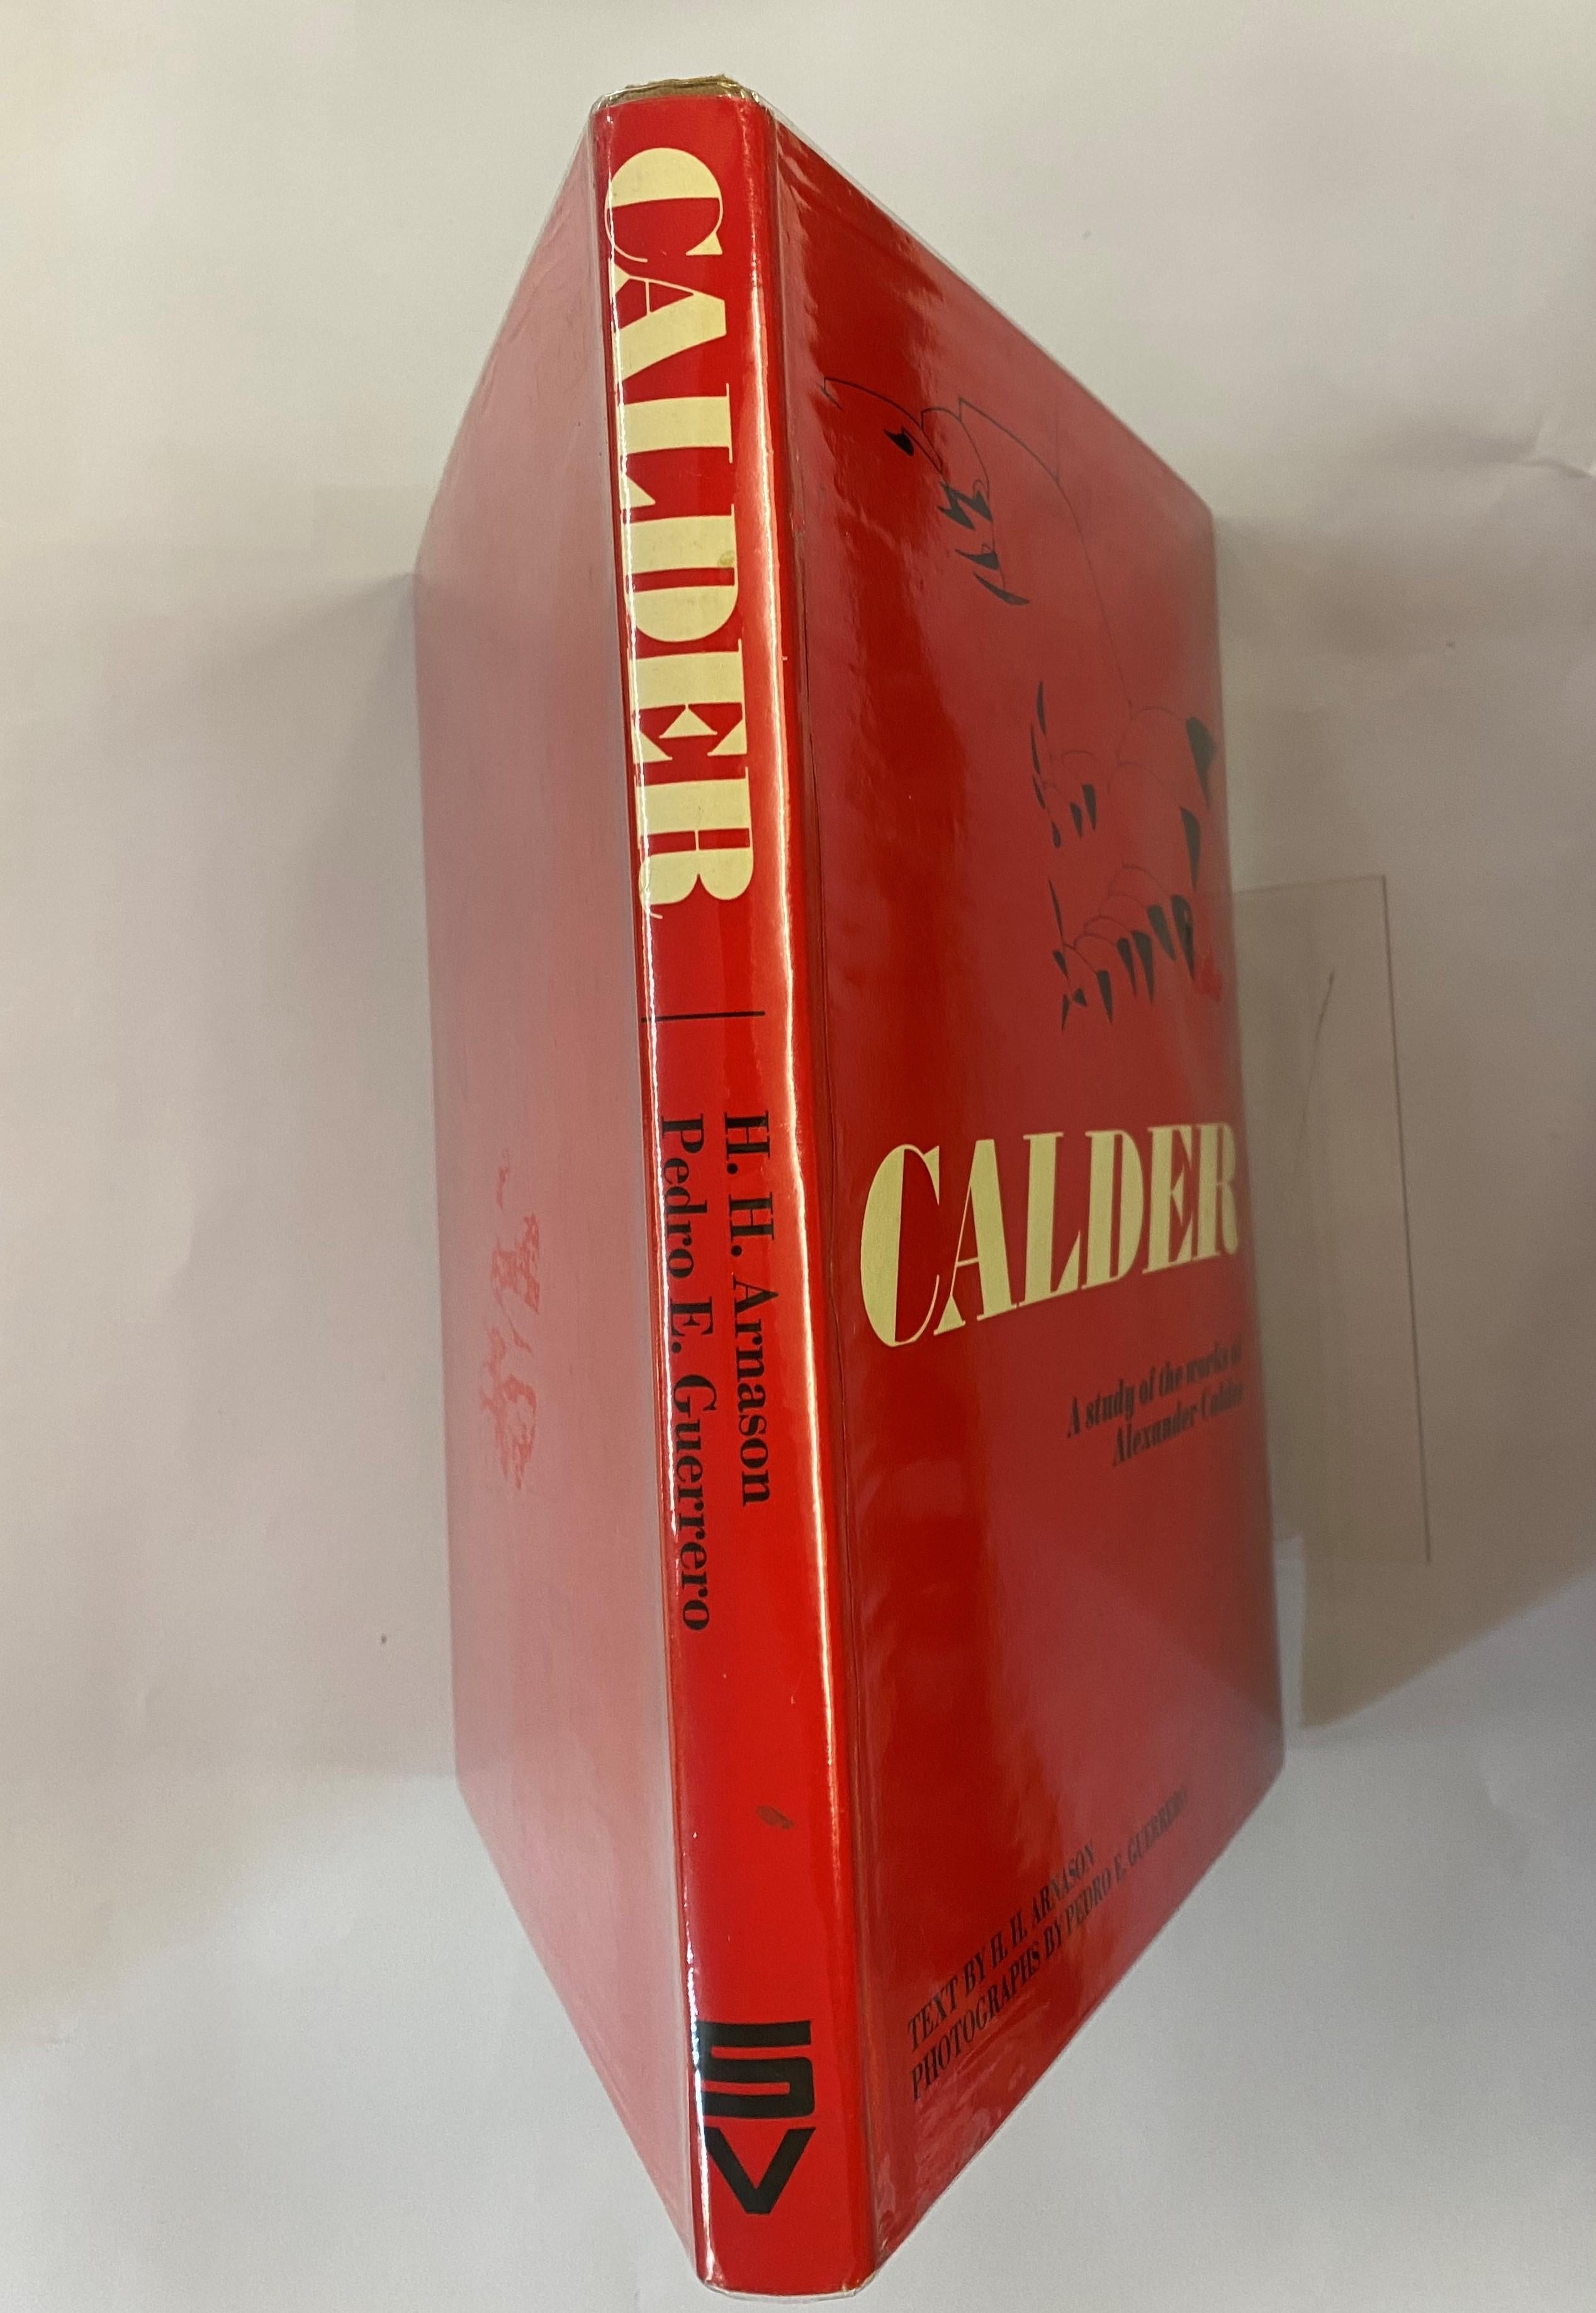 Calder: A Study of the Works of Alexander Calder by H. H. Arnason (Book) For Sale 12